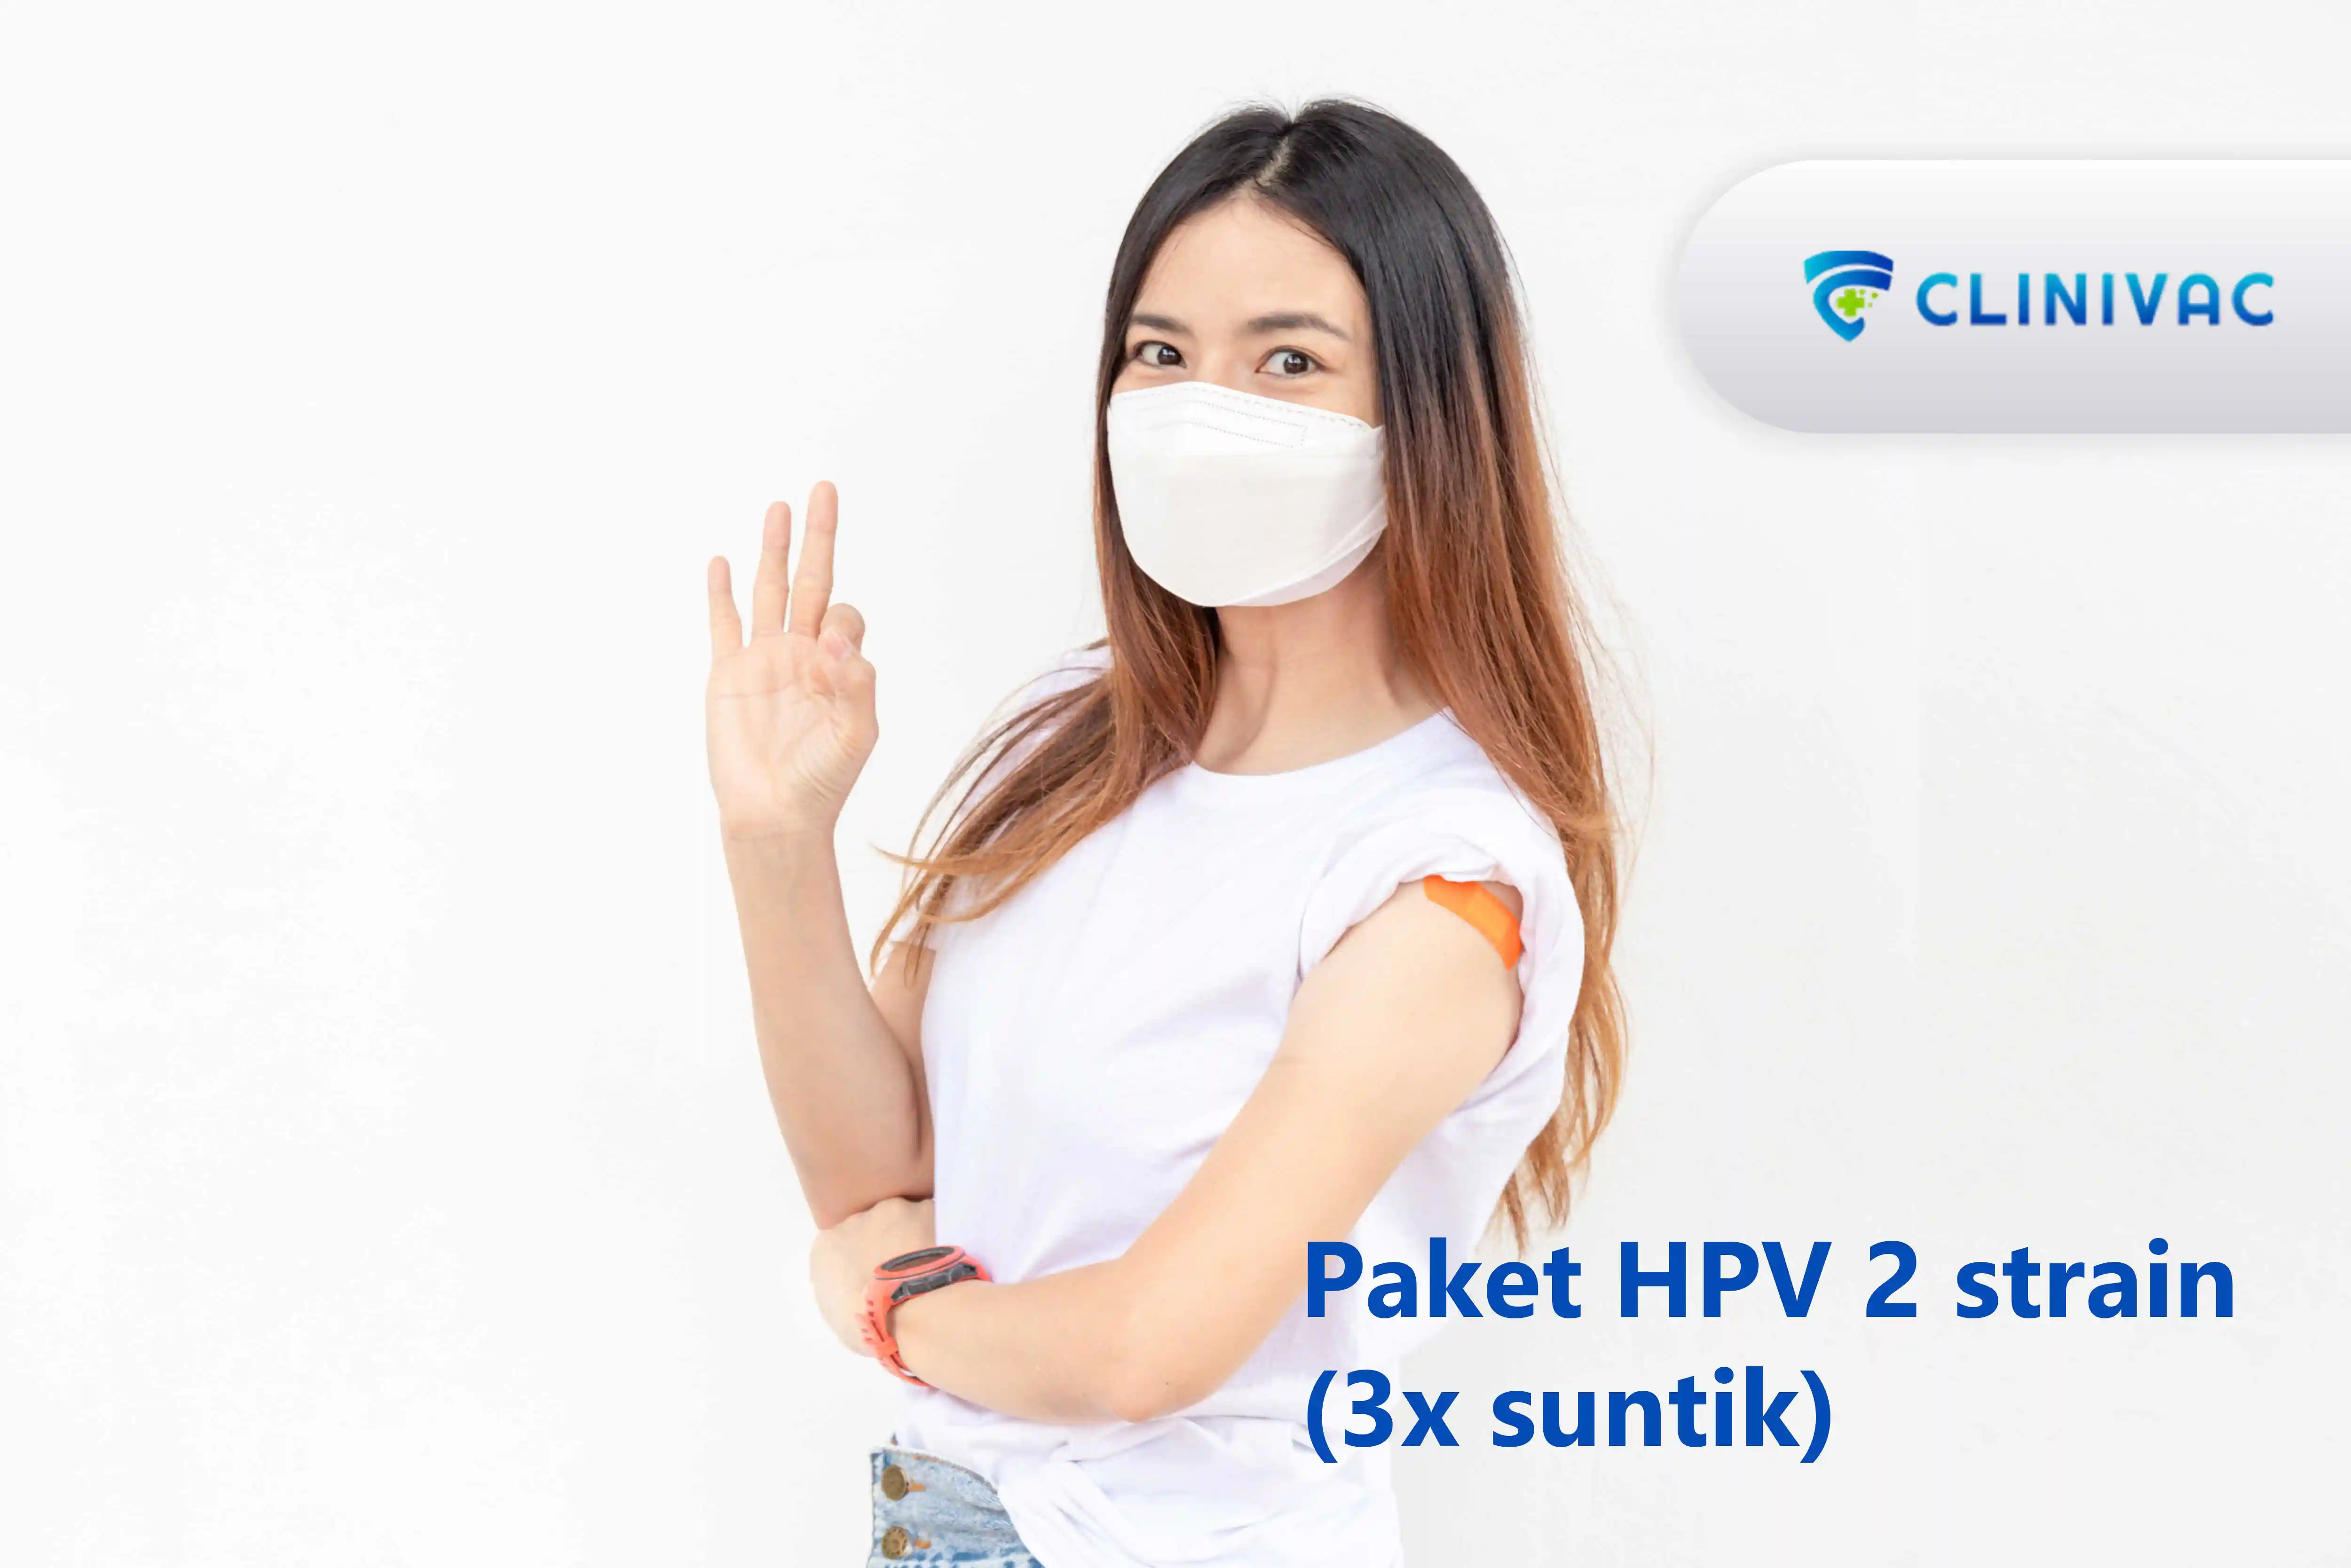 Clinivac---5.-Paket-HPV-2-strain-(3x-suntik) copy_1715739480.webp